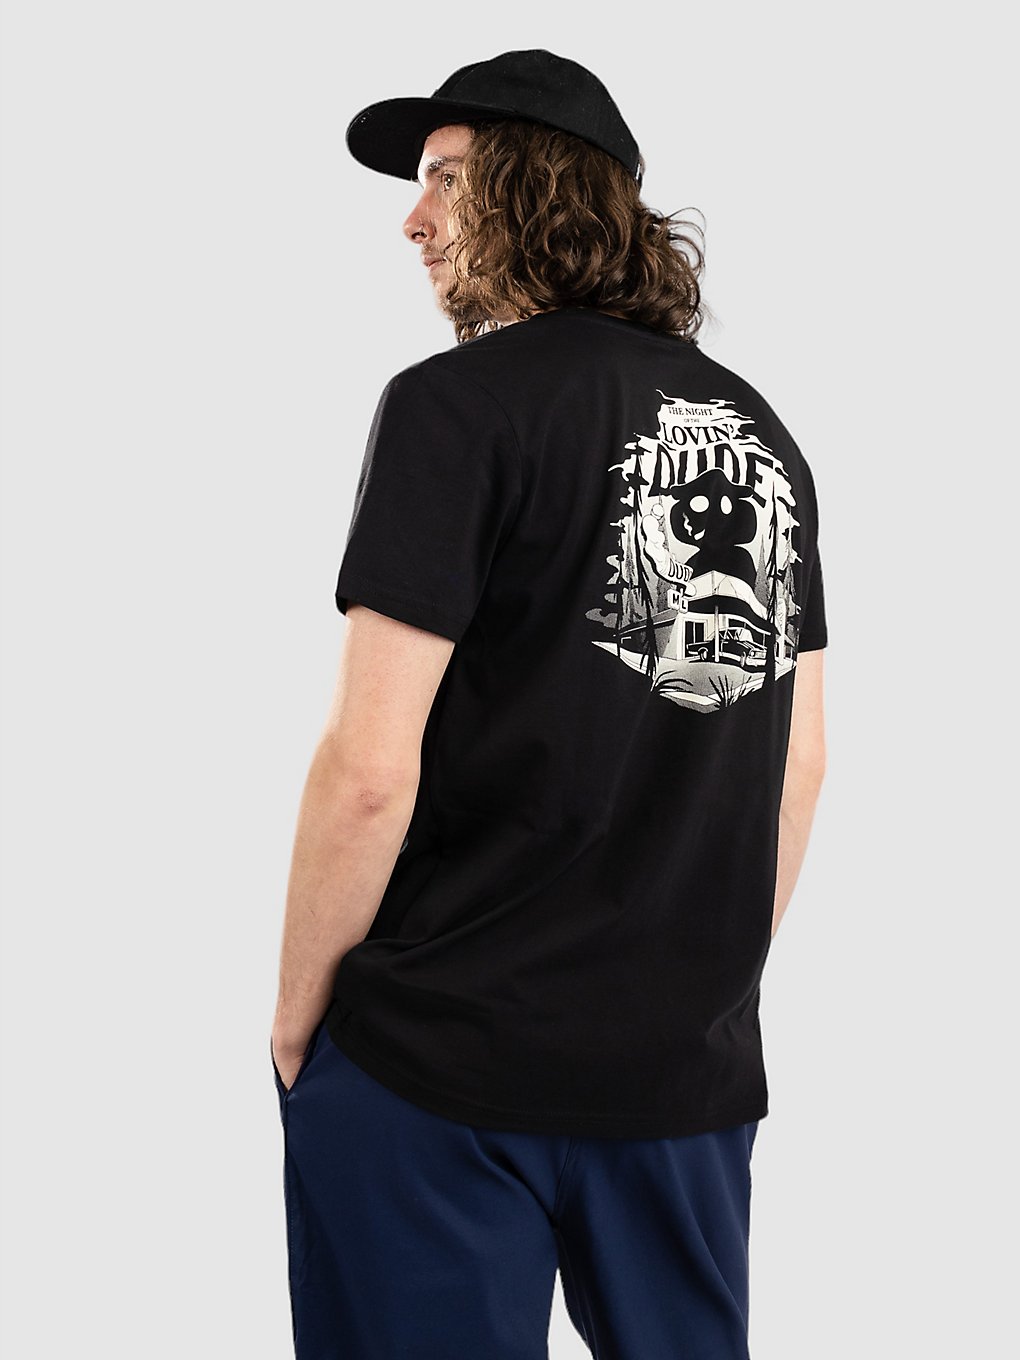 The Dudes The Horror T-Shirt black kaufen